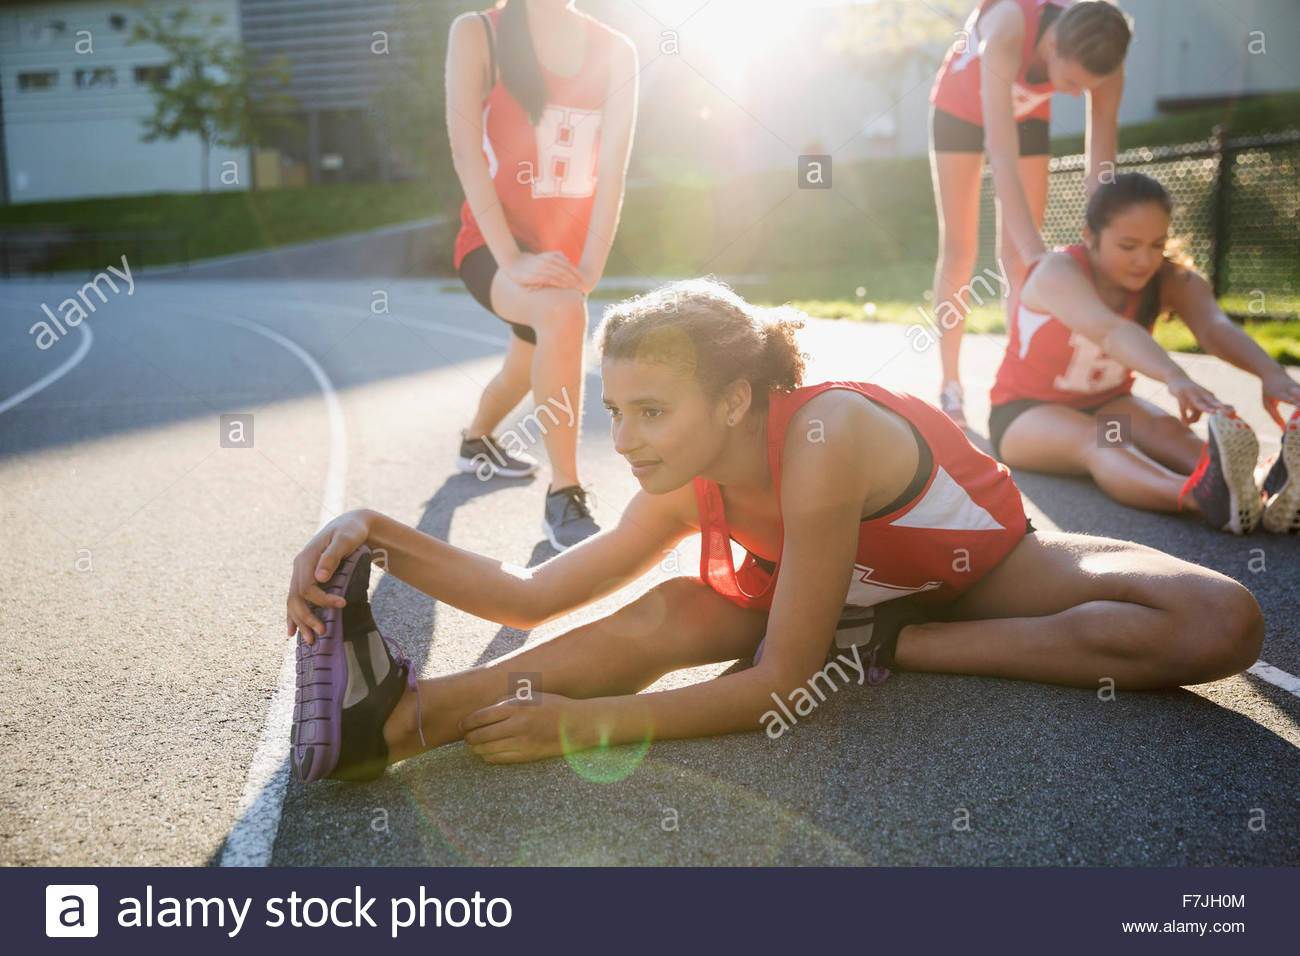 High school athlete stretching leg on running track Stock Photo